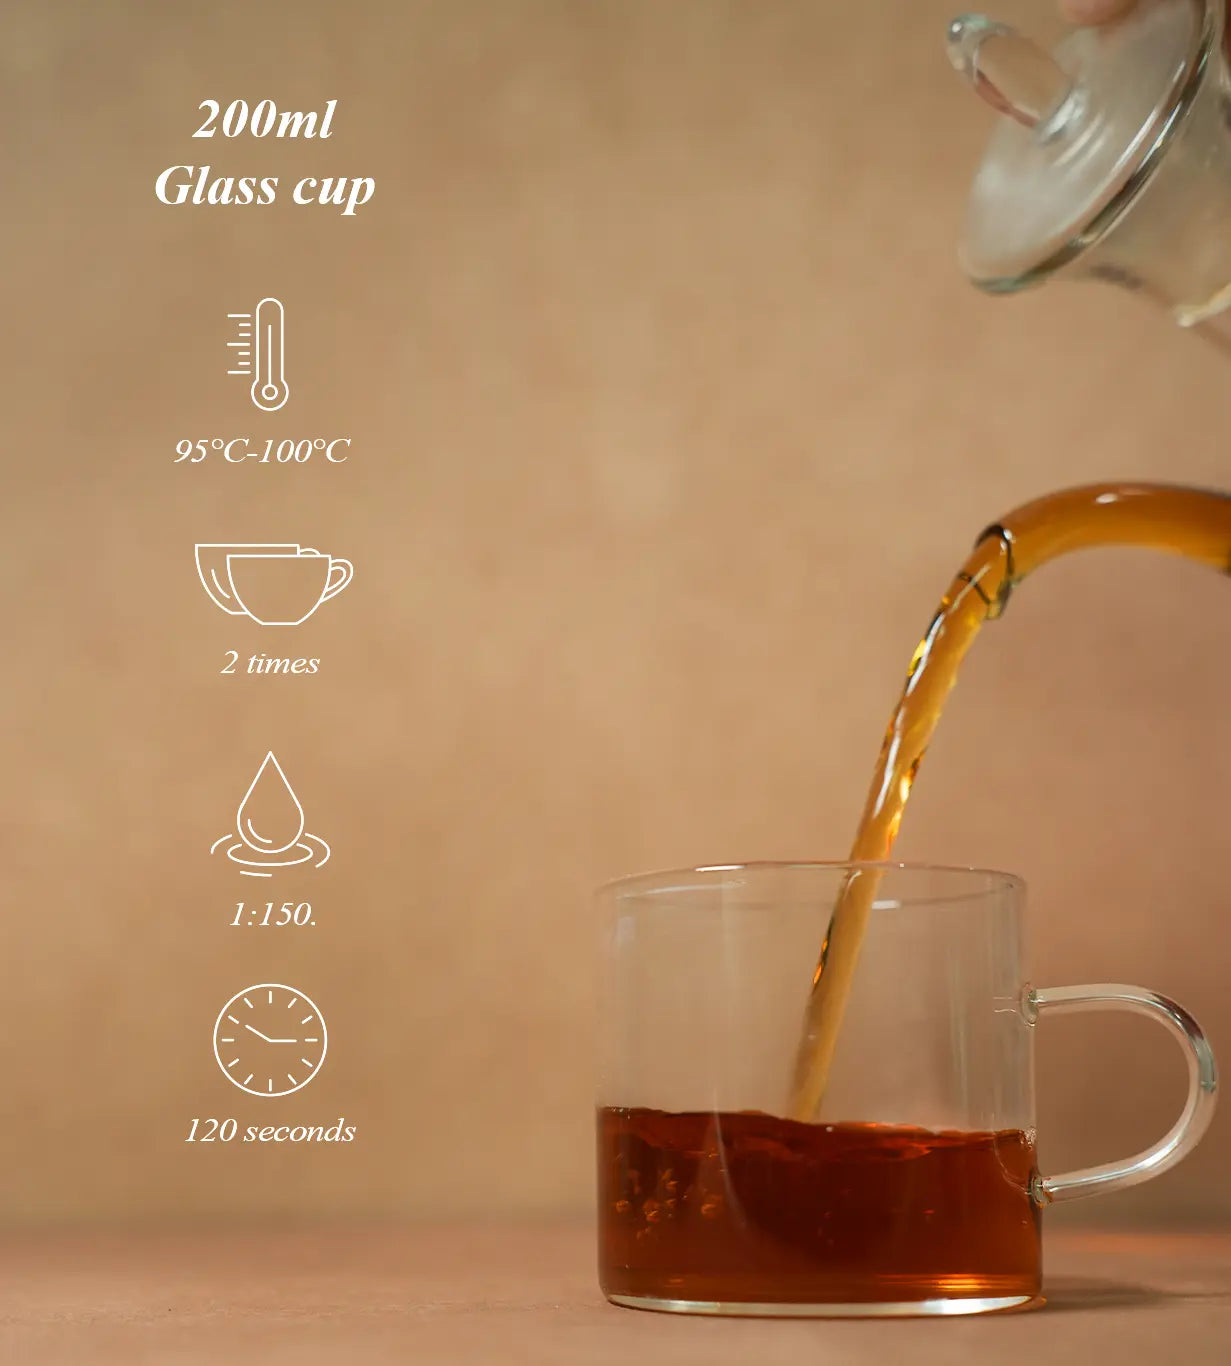 oolong tea sampler glass cup brew method